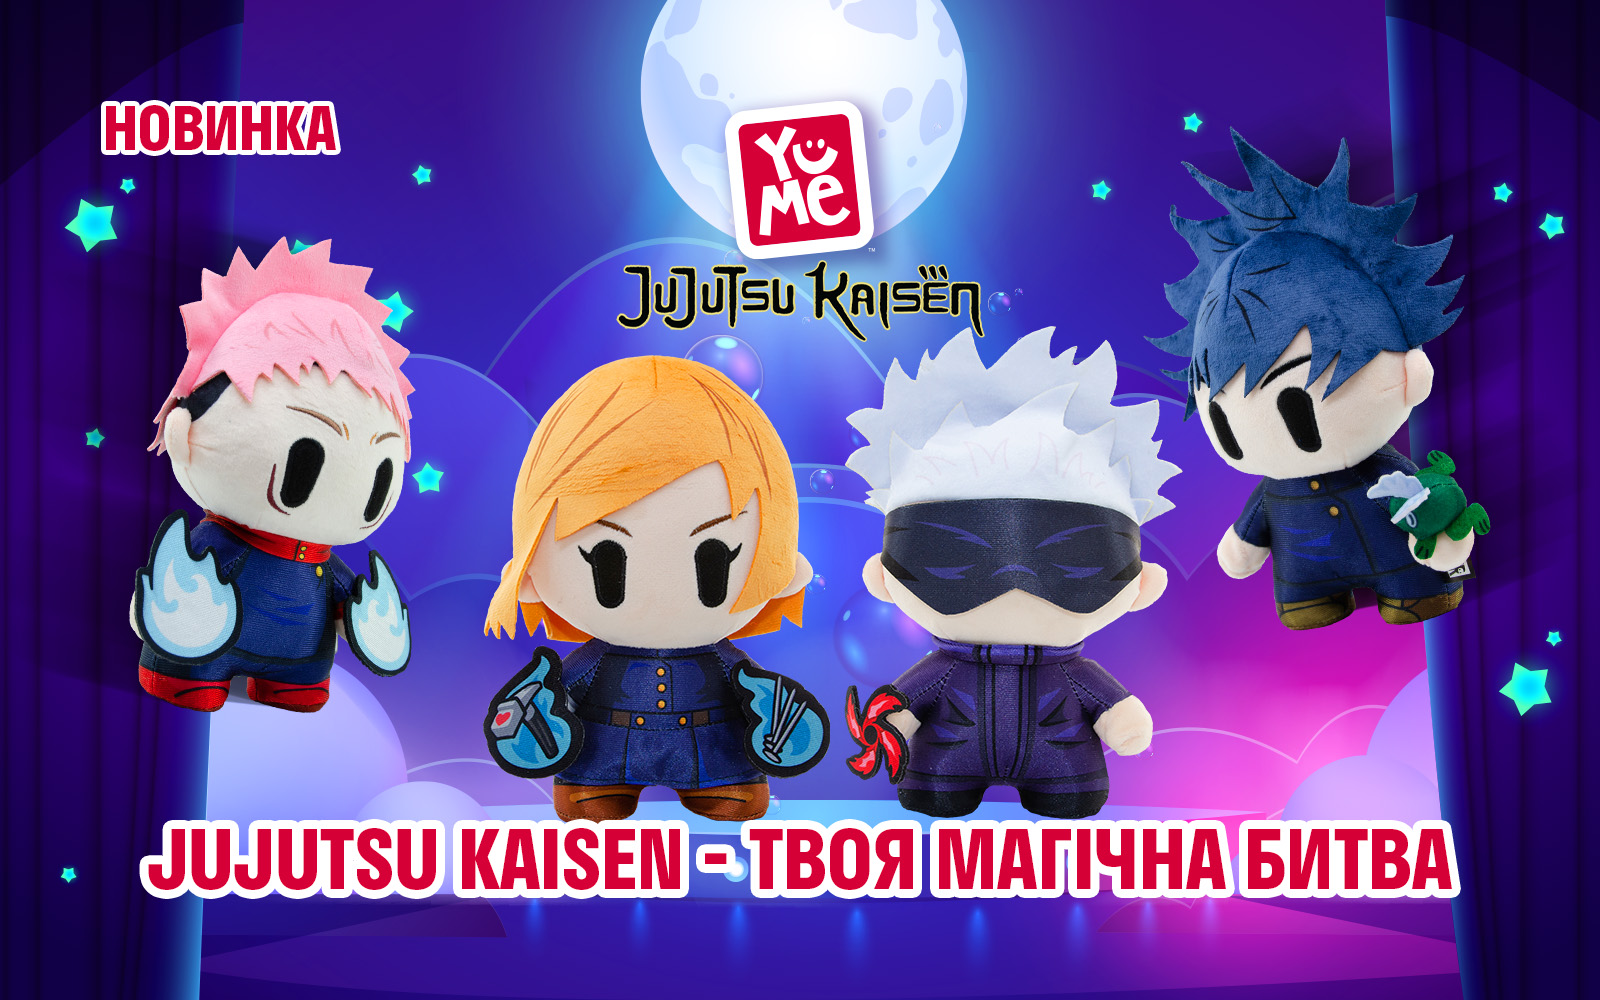 Новинка от YUME! Мягкие игрушки Jujutsu Kaisen!